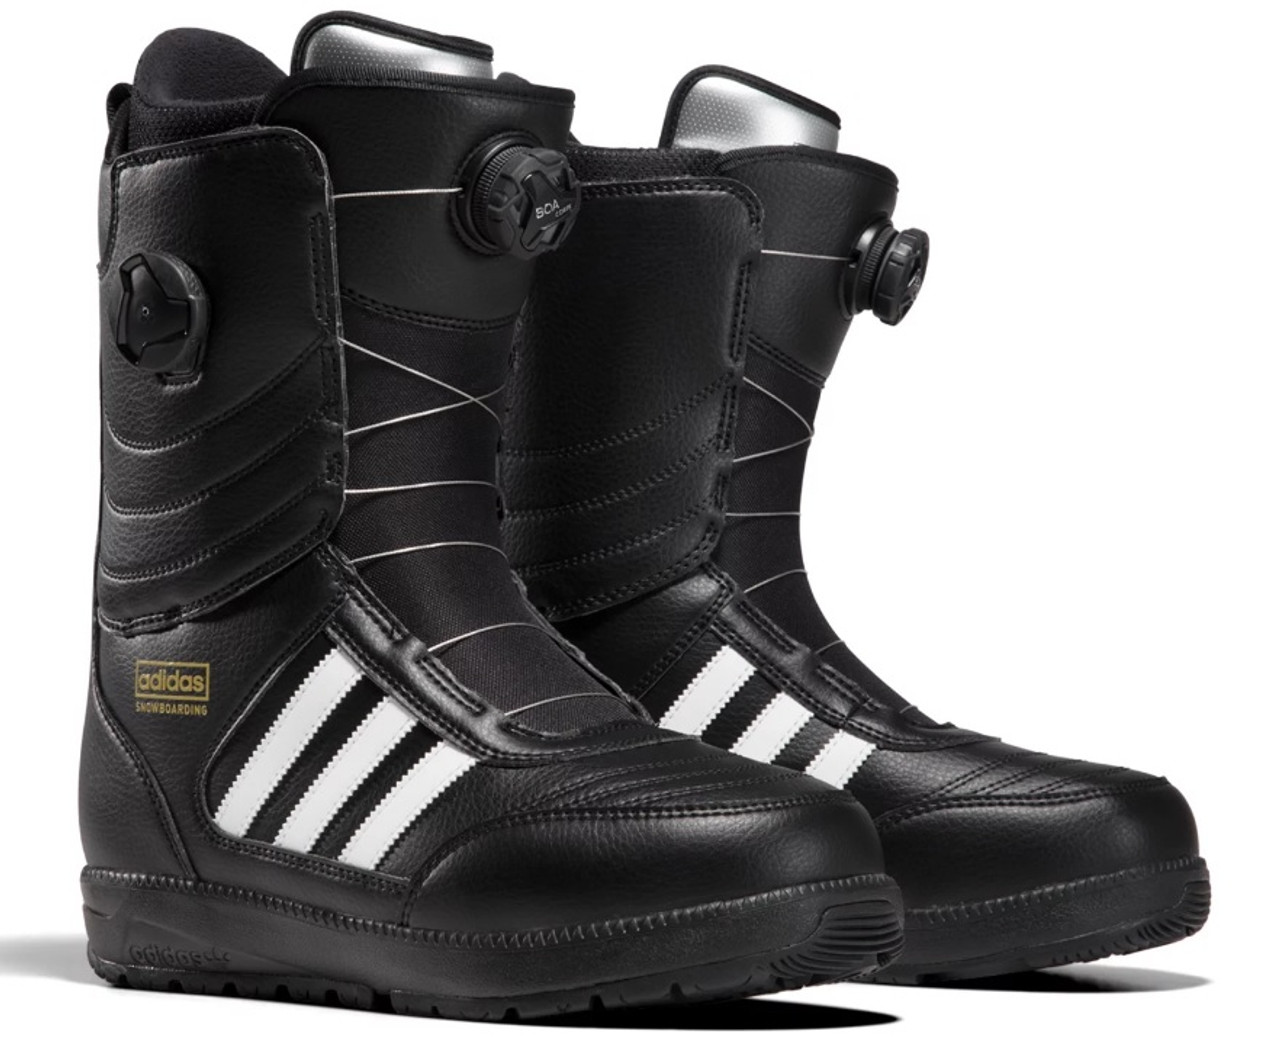 Adidas Response ADV Snowboard Boots Black White